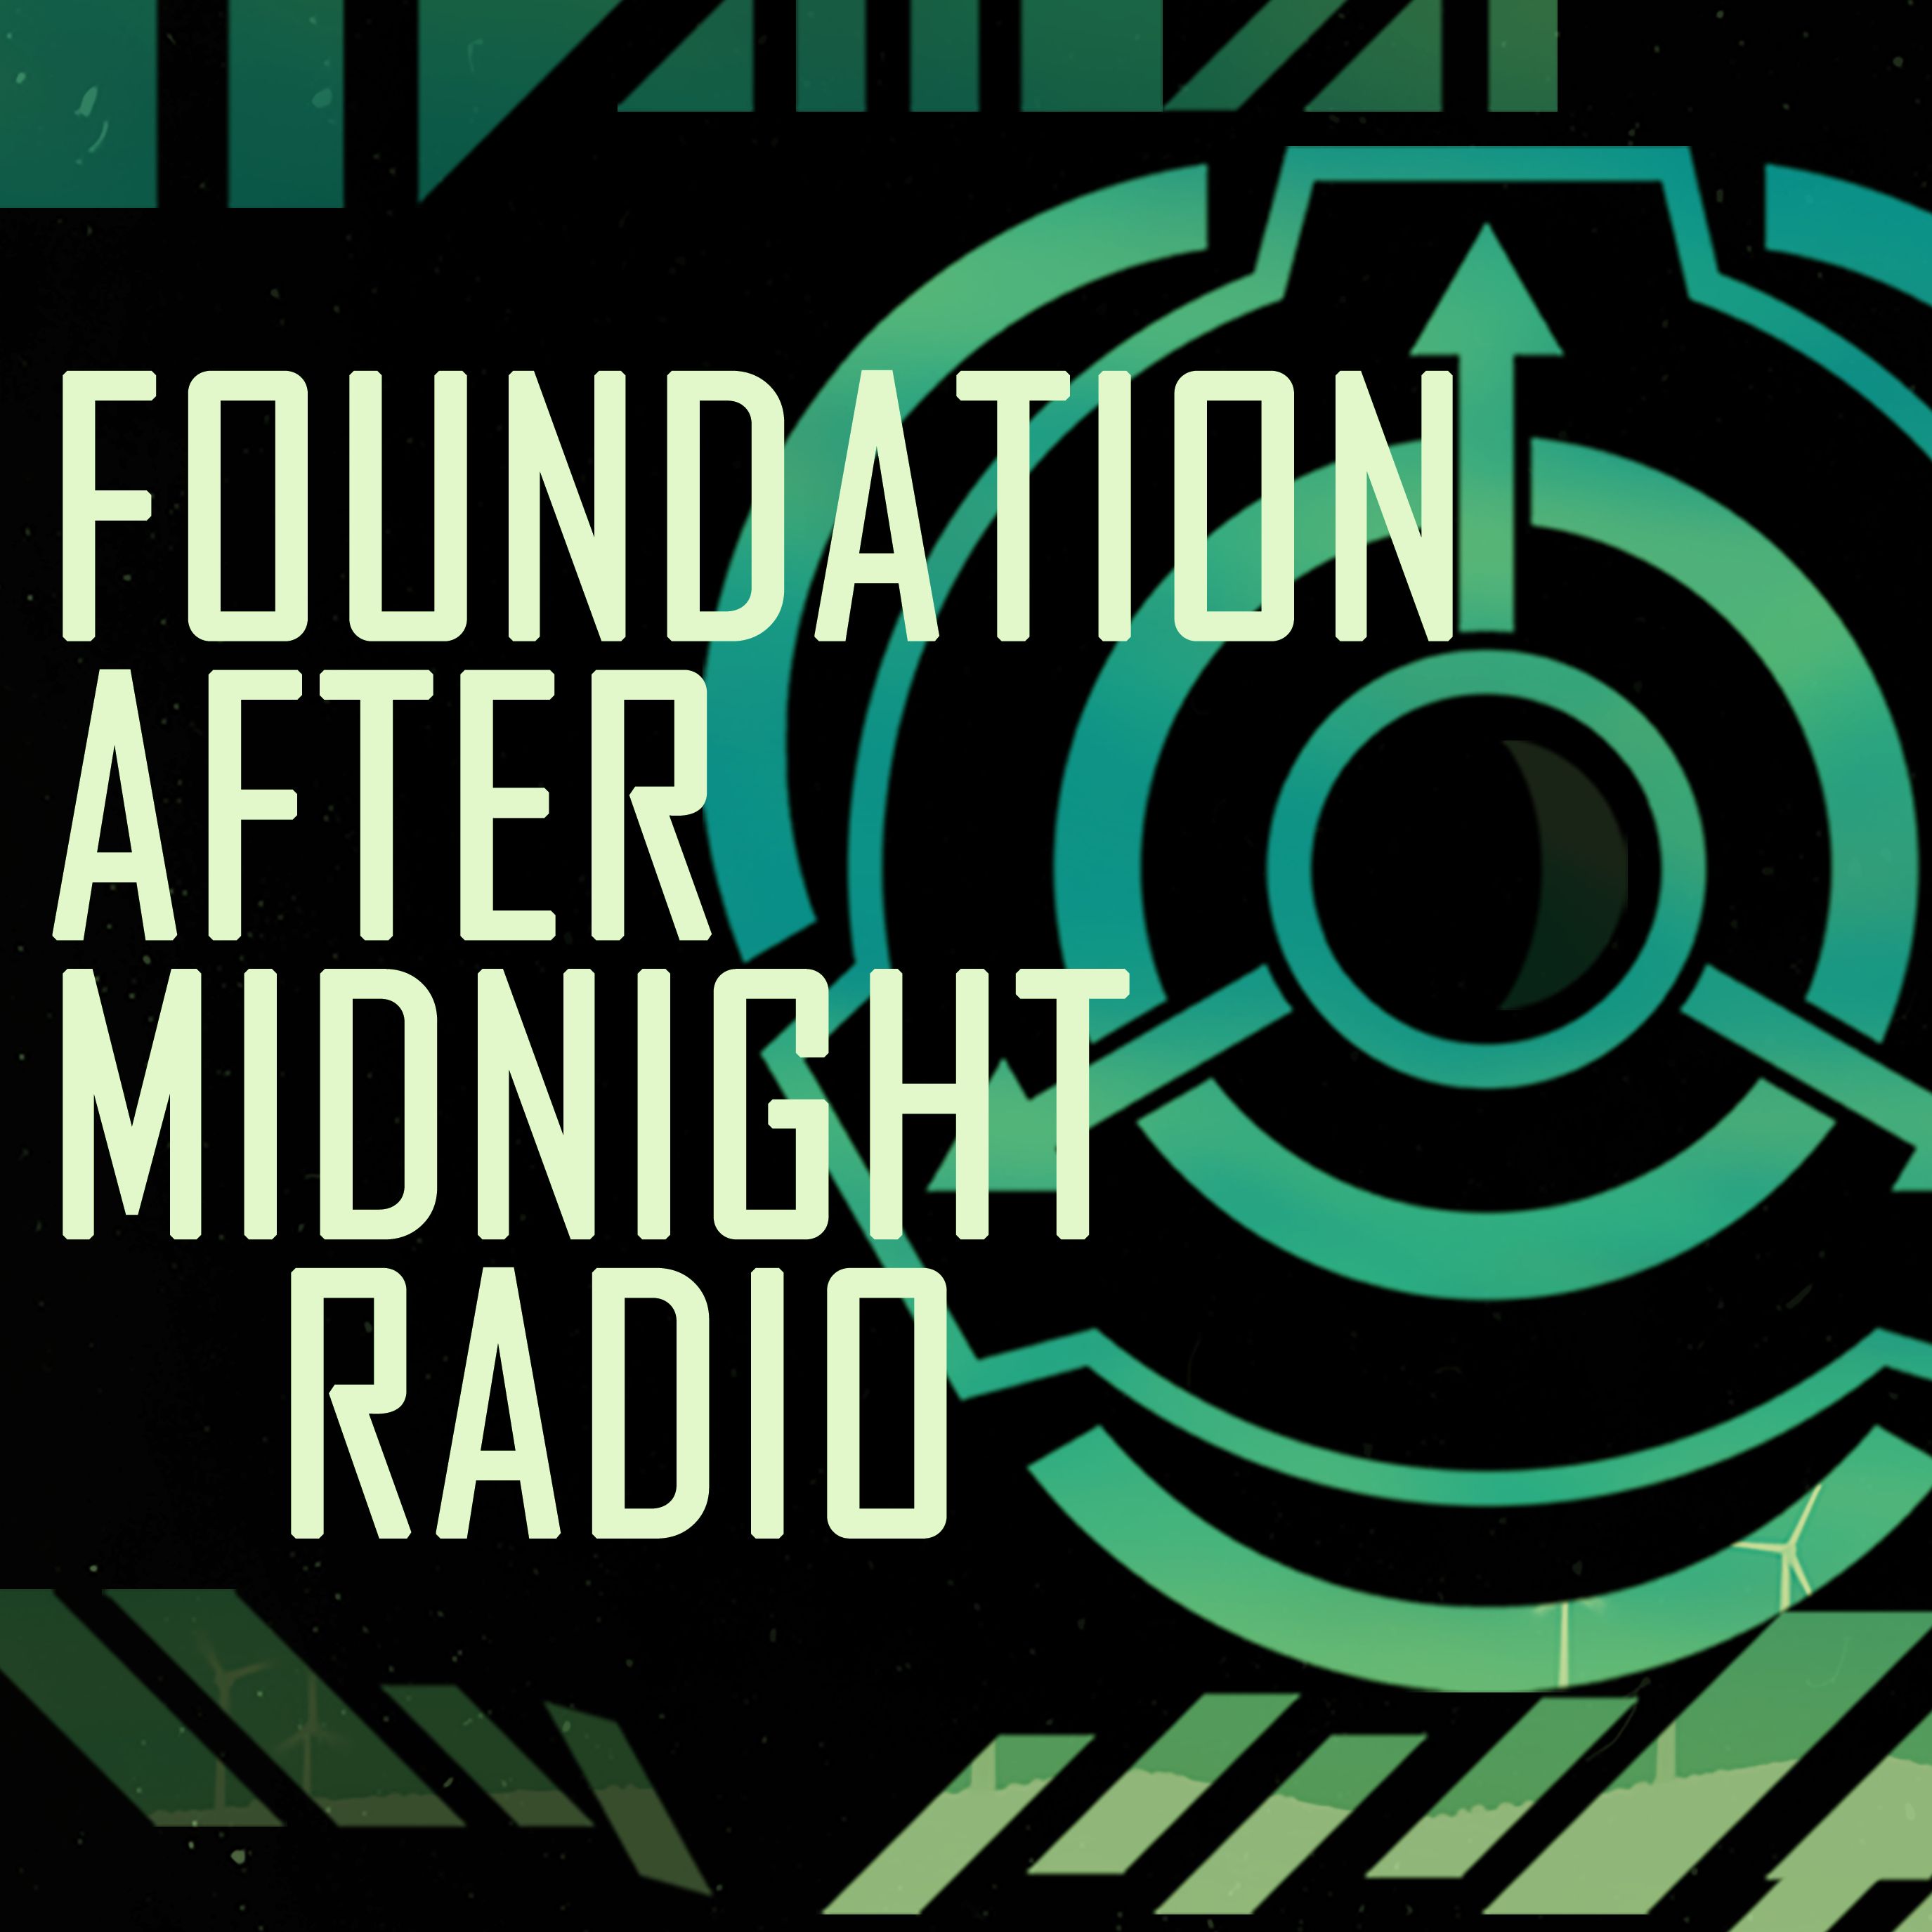 Foundation After Midnight Radio [SCP]